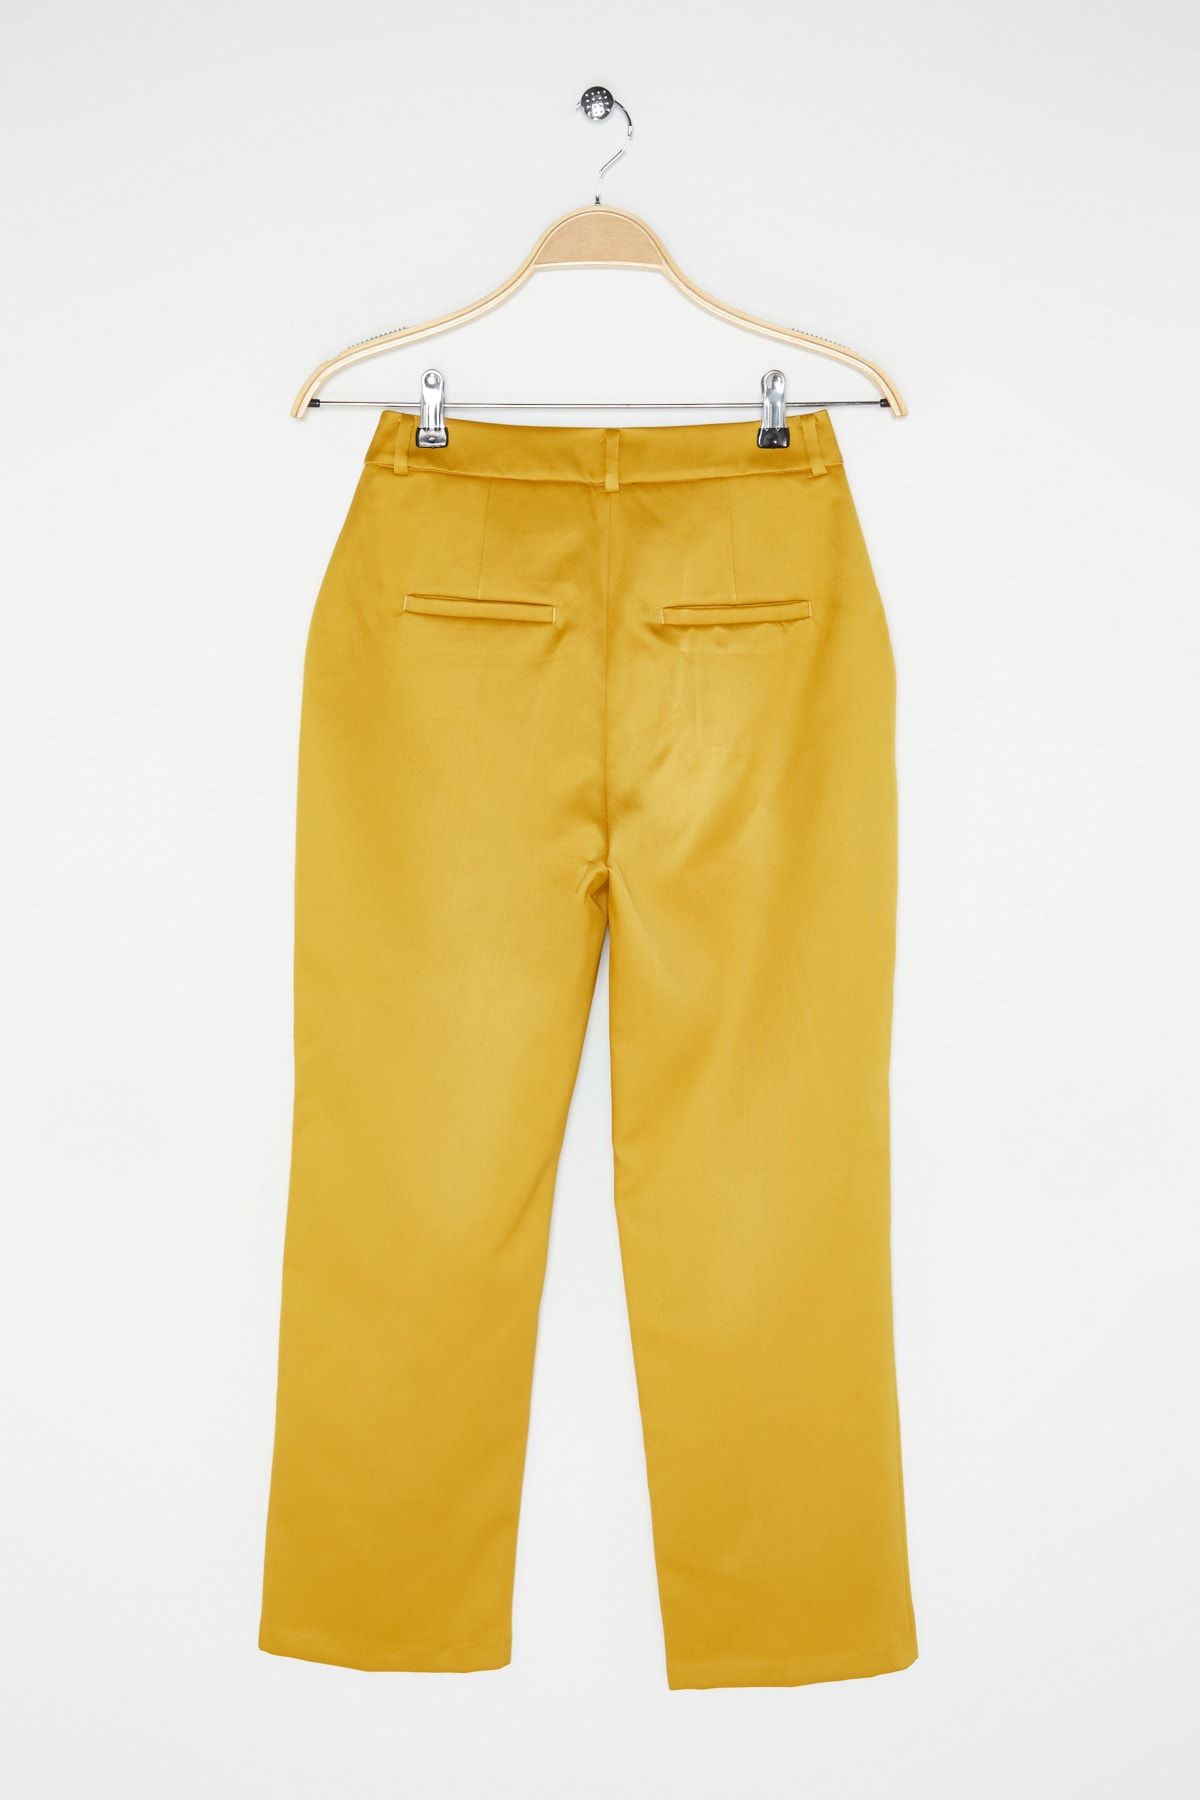 Nanette Lepore | Pants & Jumpsuits | Nanette Lepore Hamilton Skinny Tapered  Leg Cuff Dark Mustard Pants 629 | Poshmark